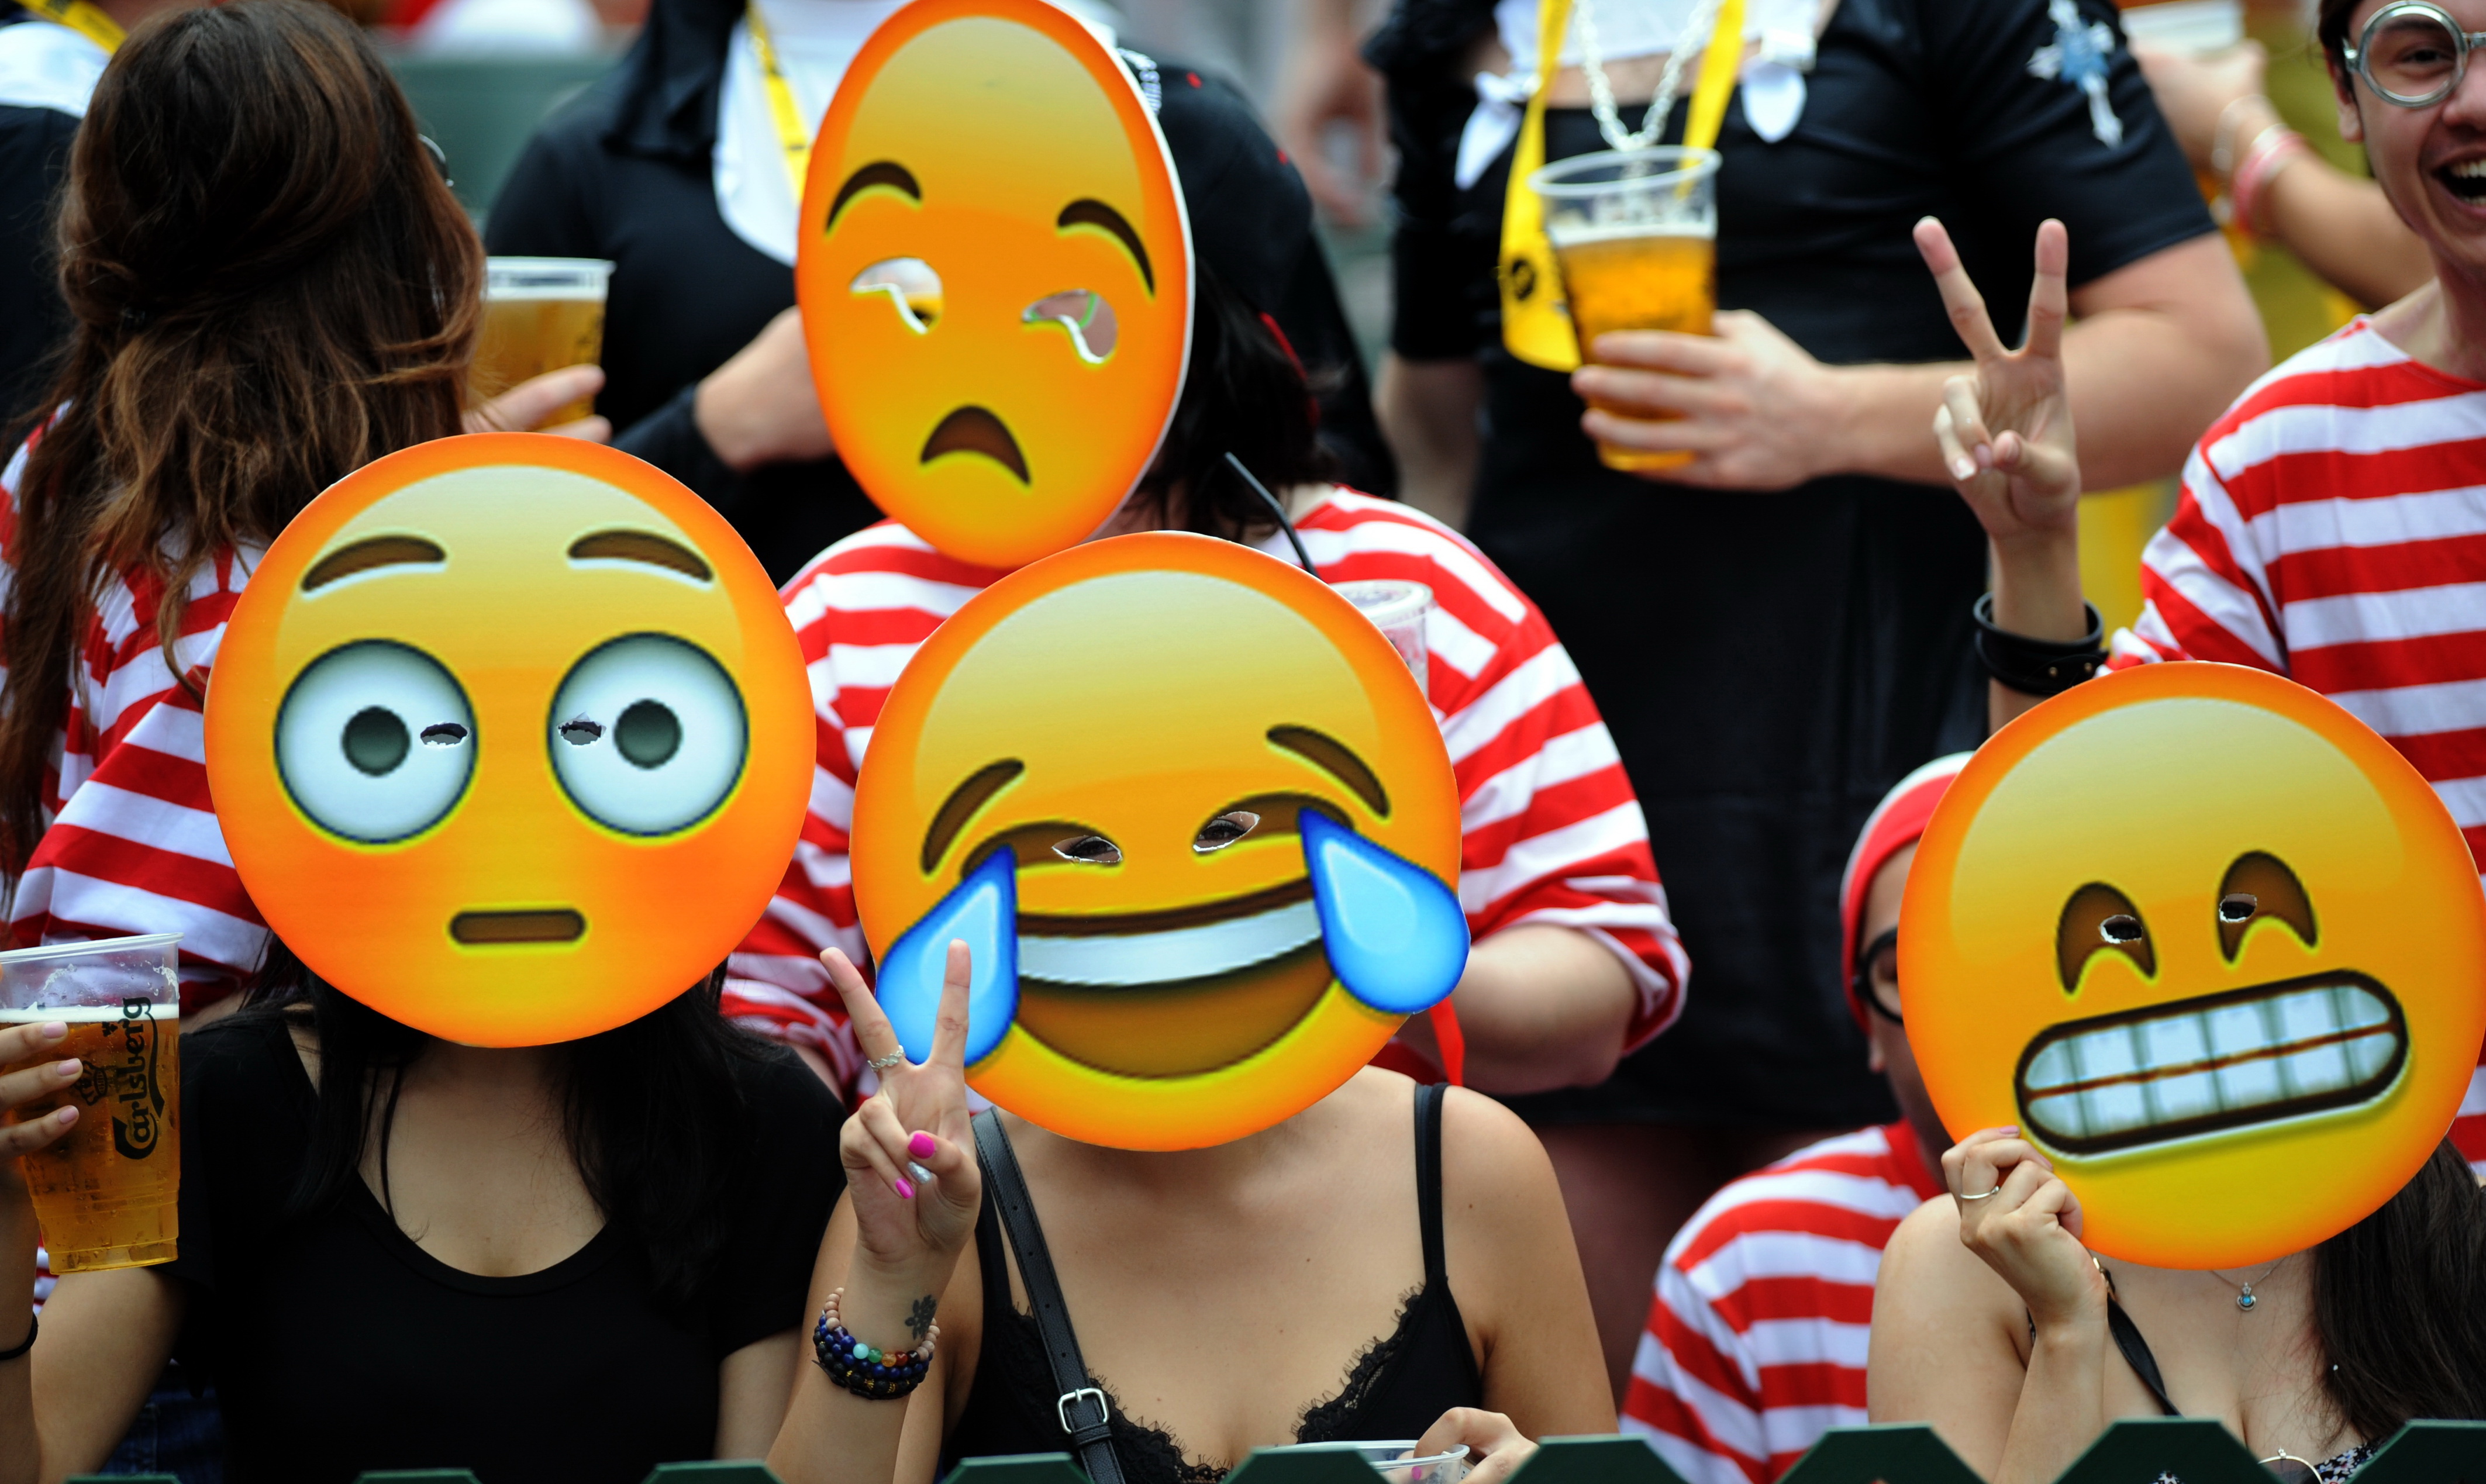 Fans wearing emoji masks watch a Hong Kong Seven rugby match in Hong Kong on March 28, 2015 (AP)